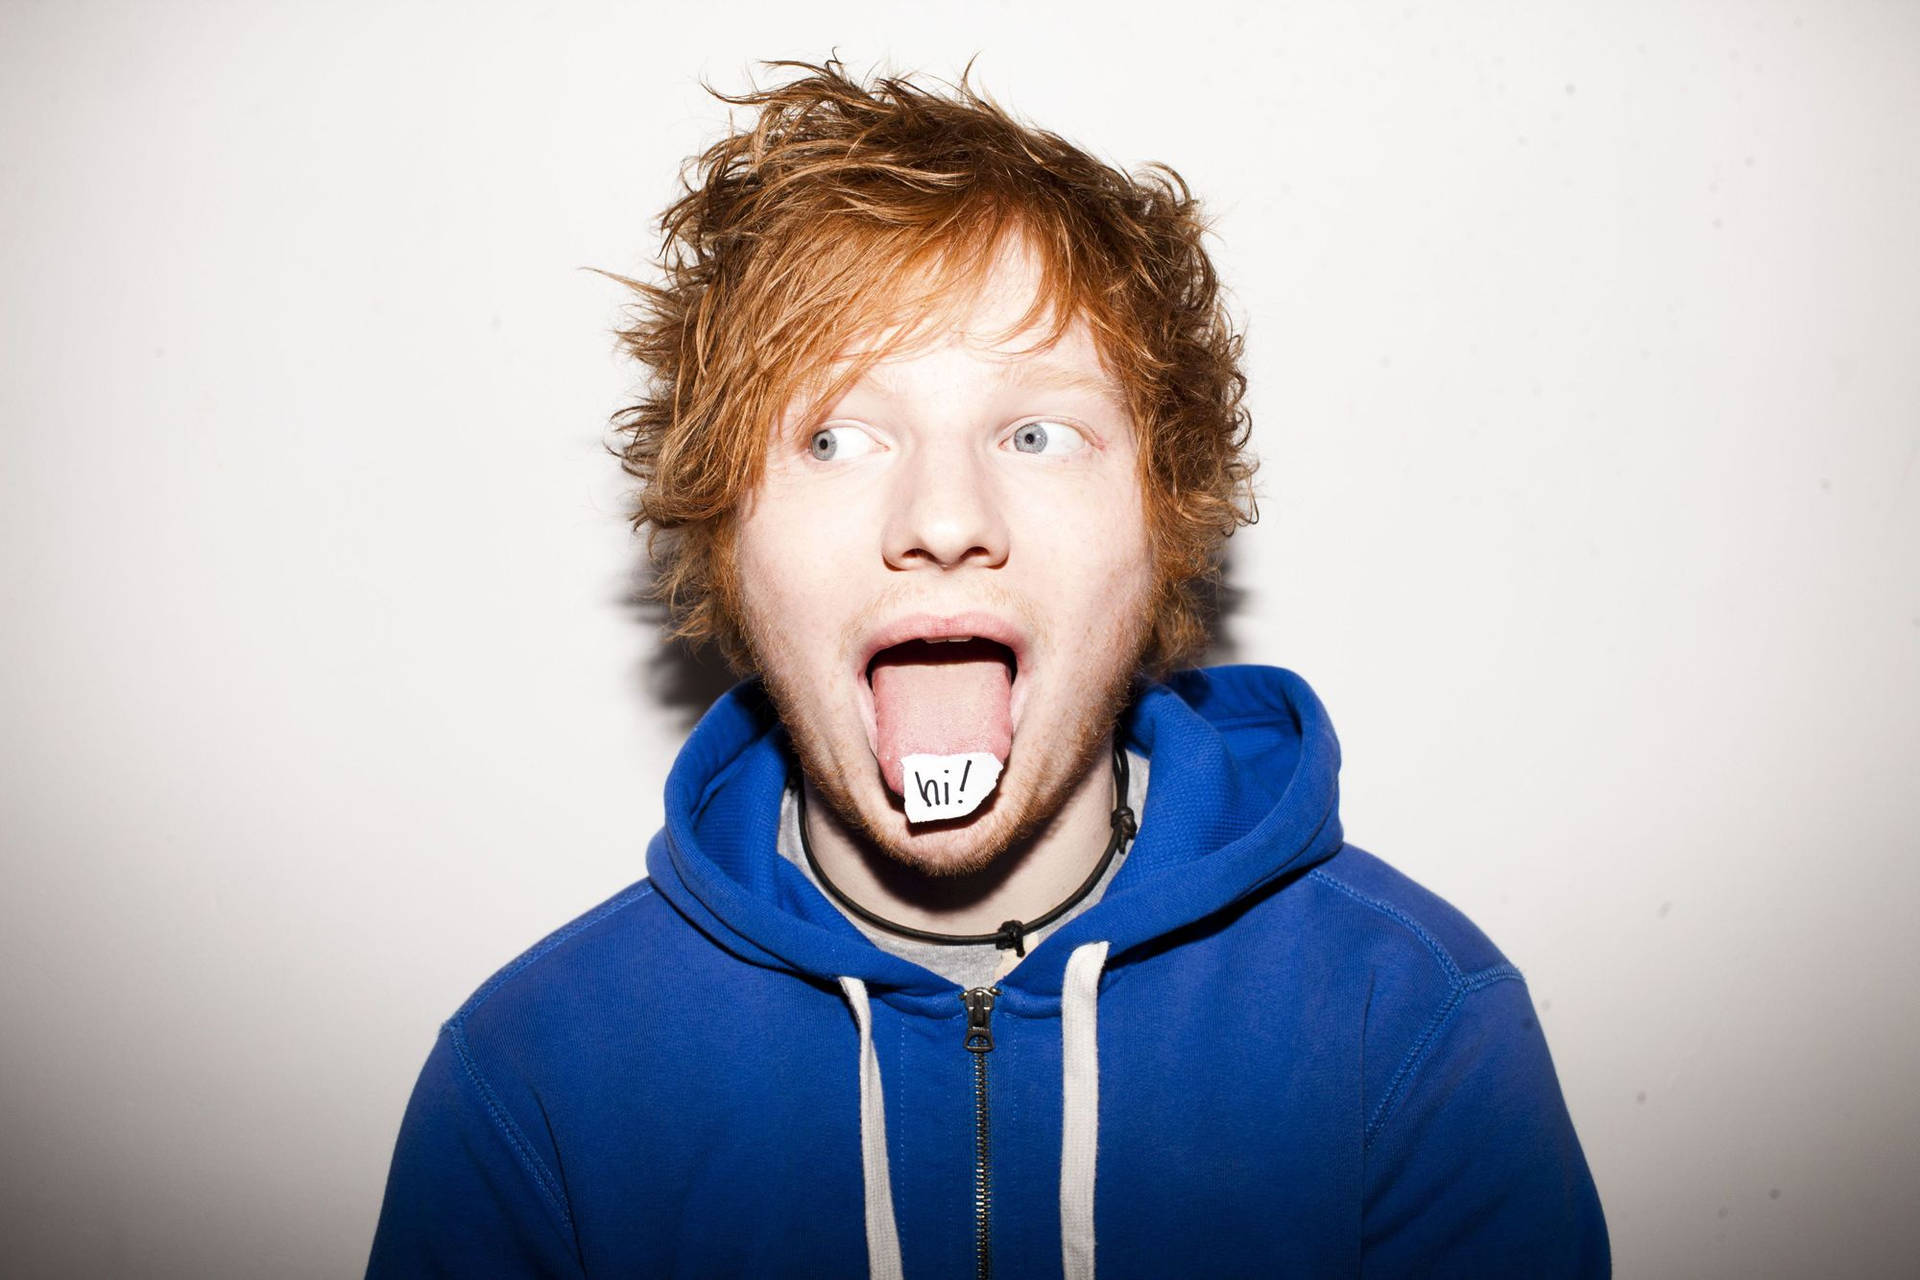 Ed Sheeran performs a comedic facial expression. Wallpaper